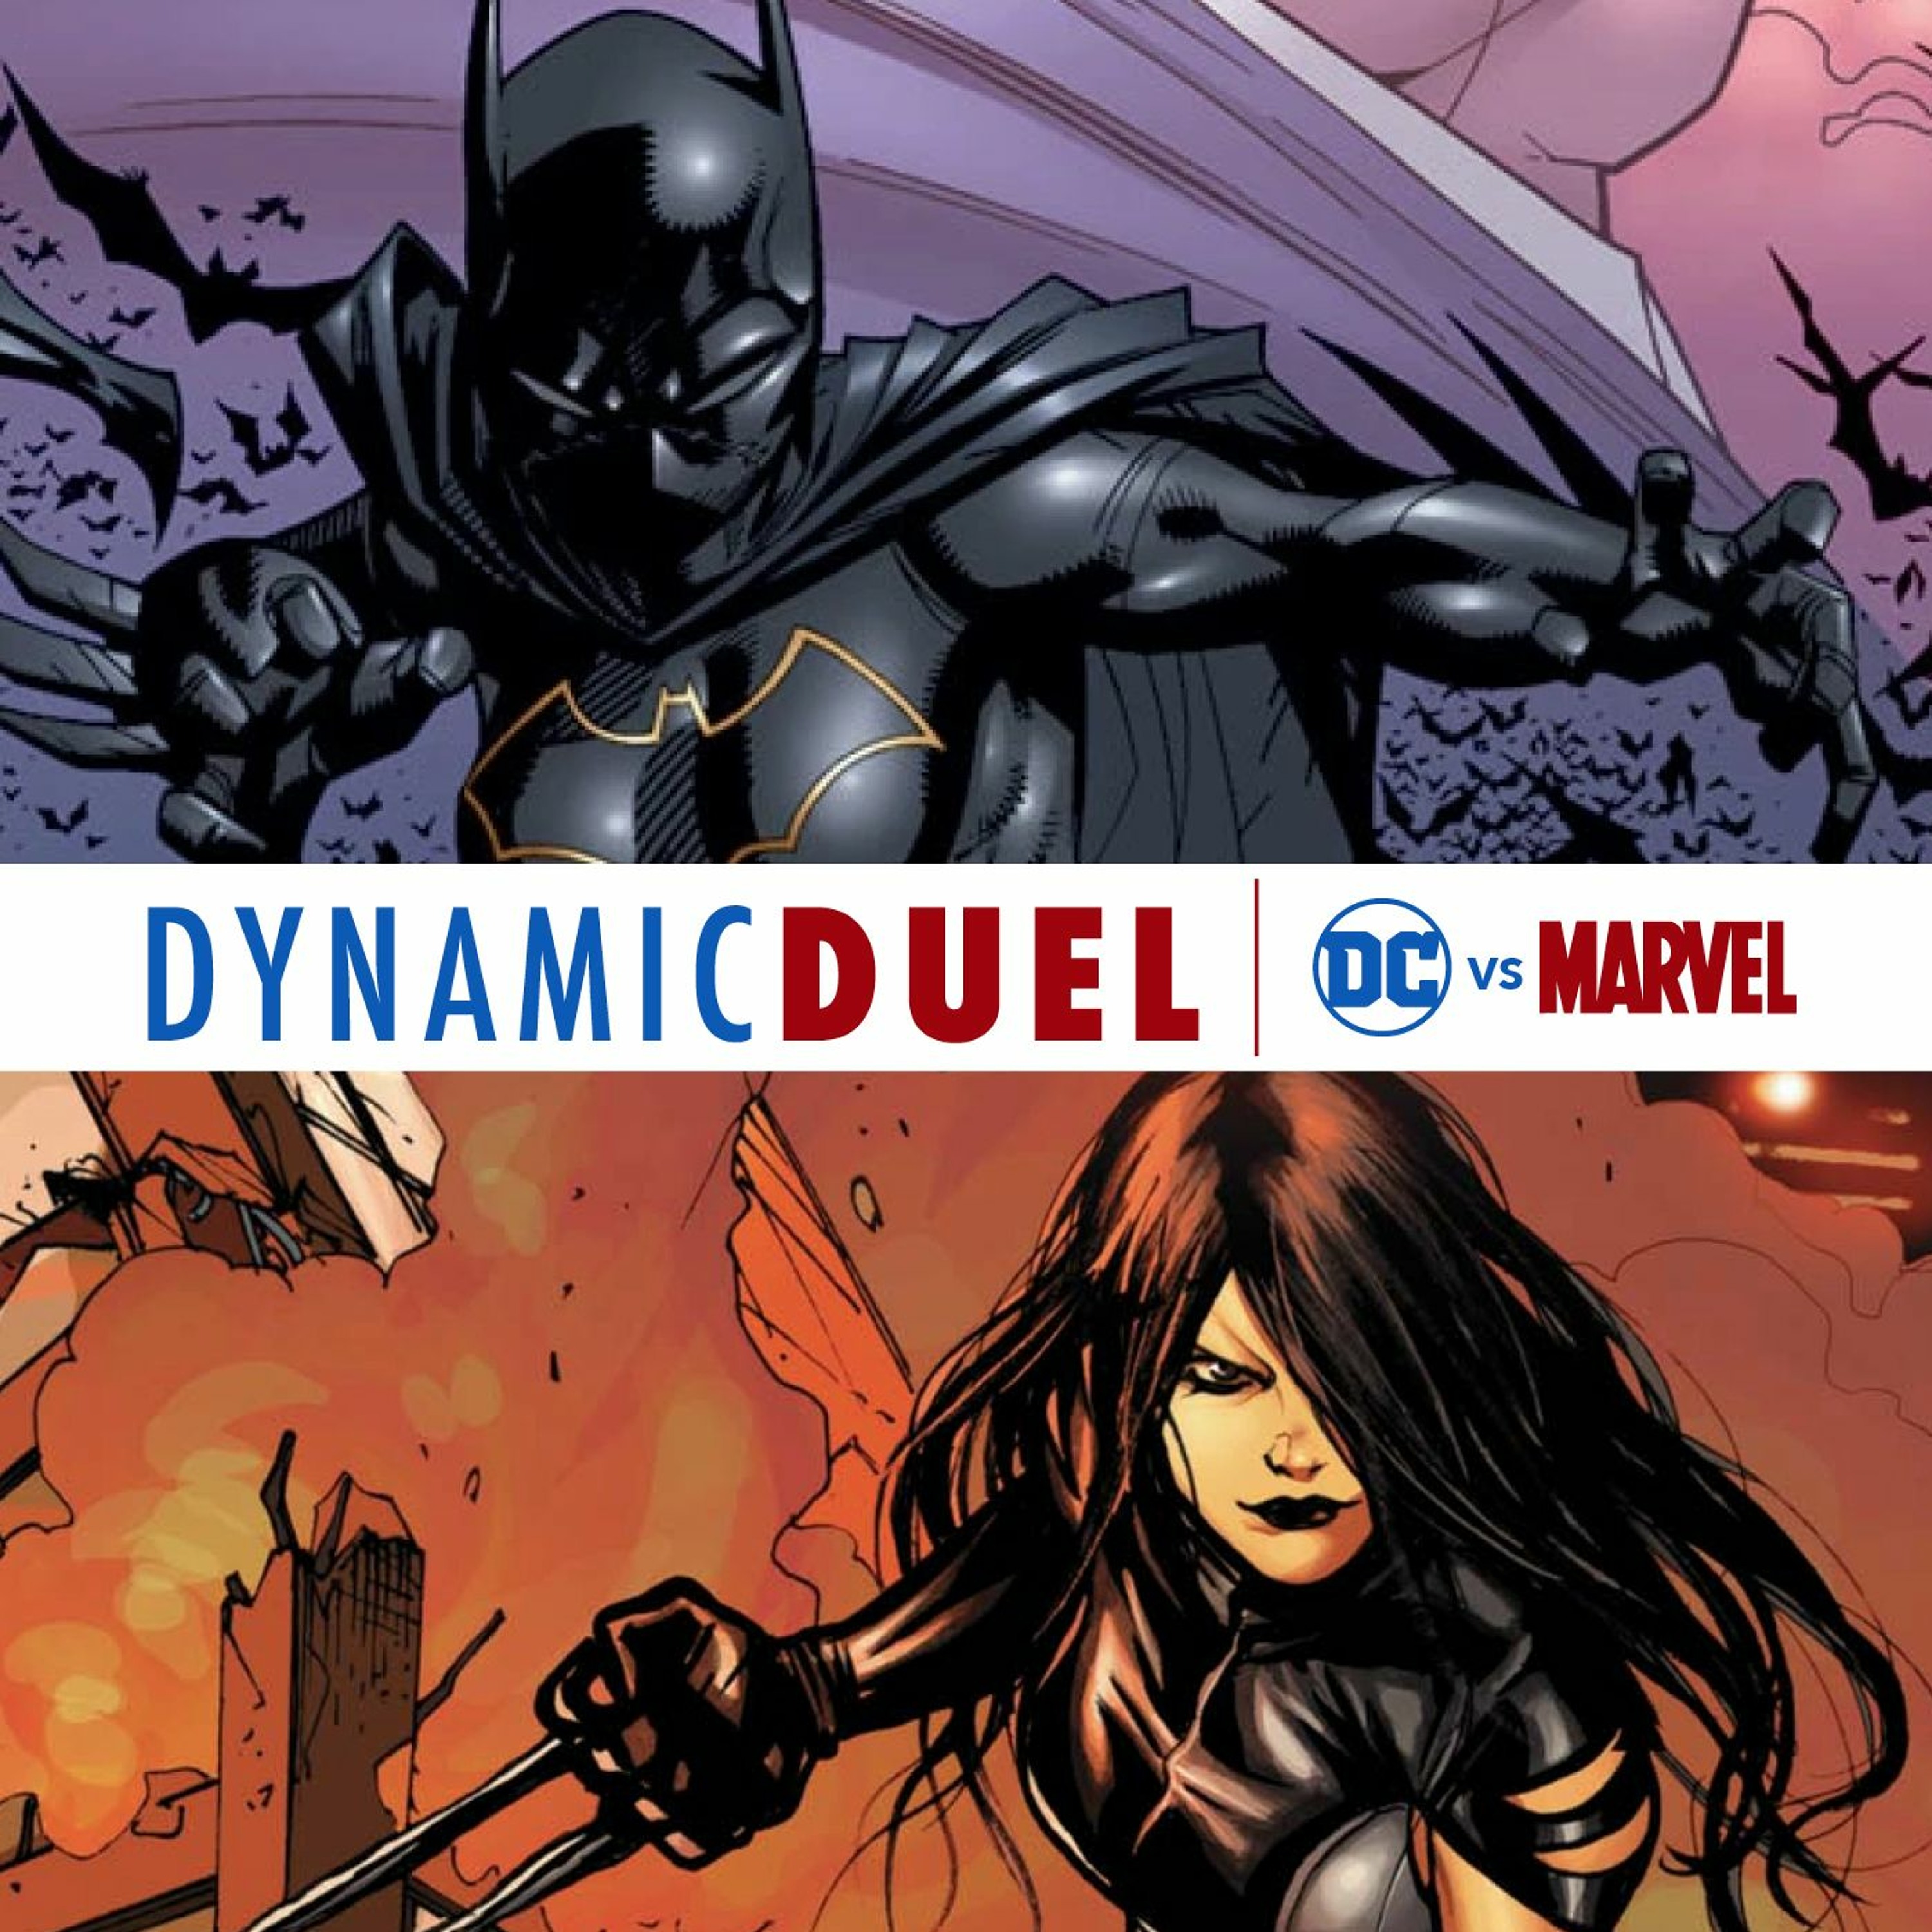 Batgirl (Cassandra Cain) vs X-23